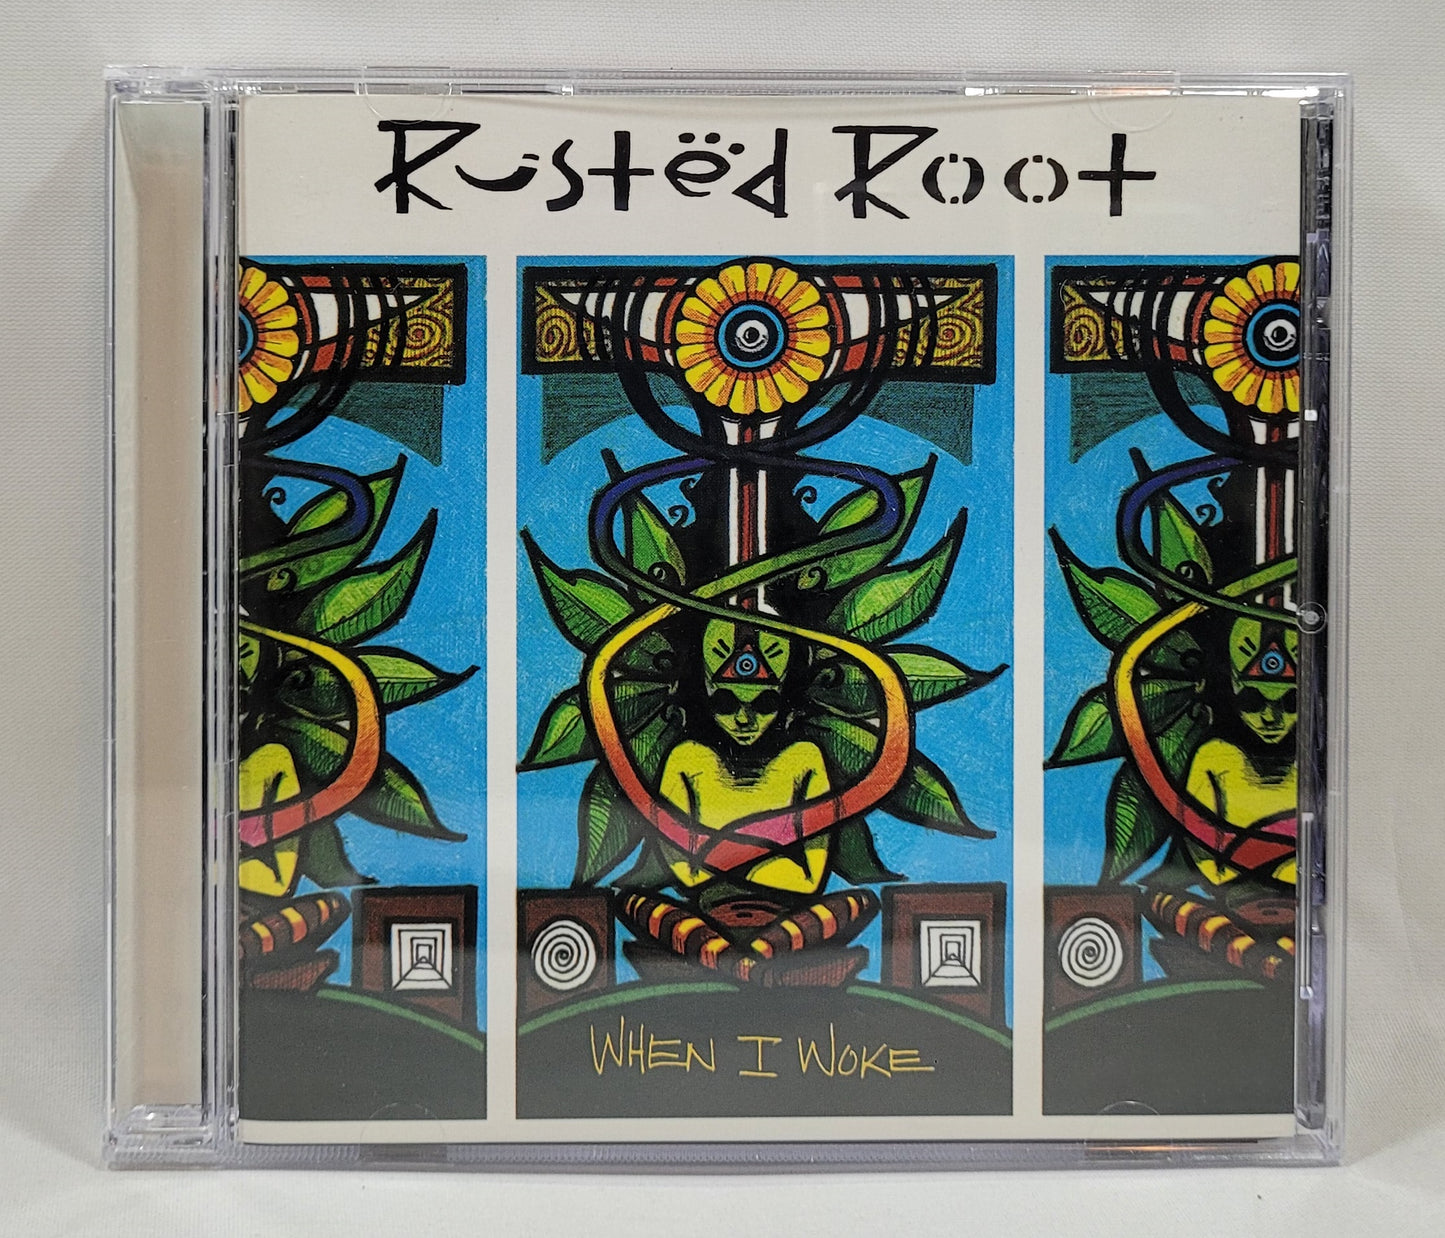 Rusted Root - When I Woke [CD]